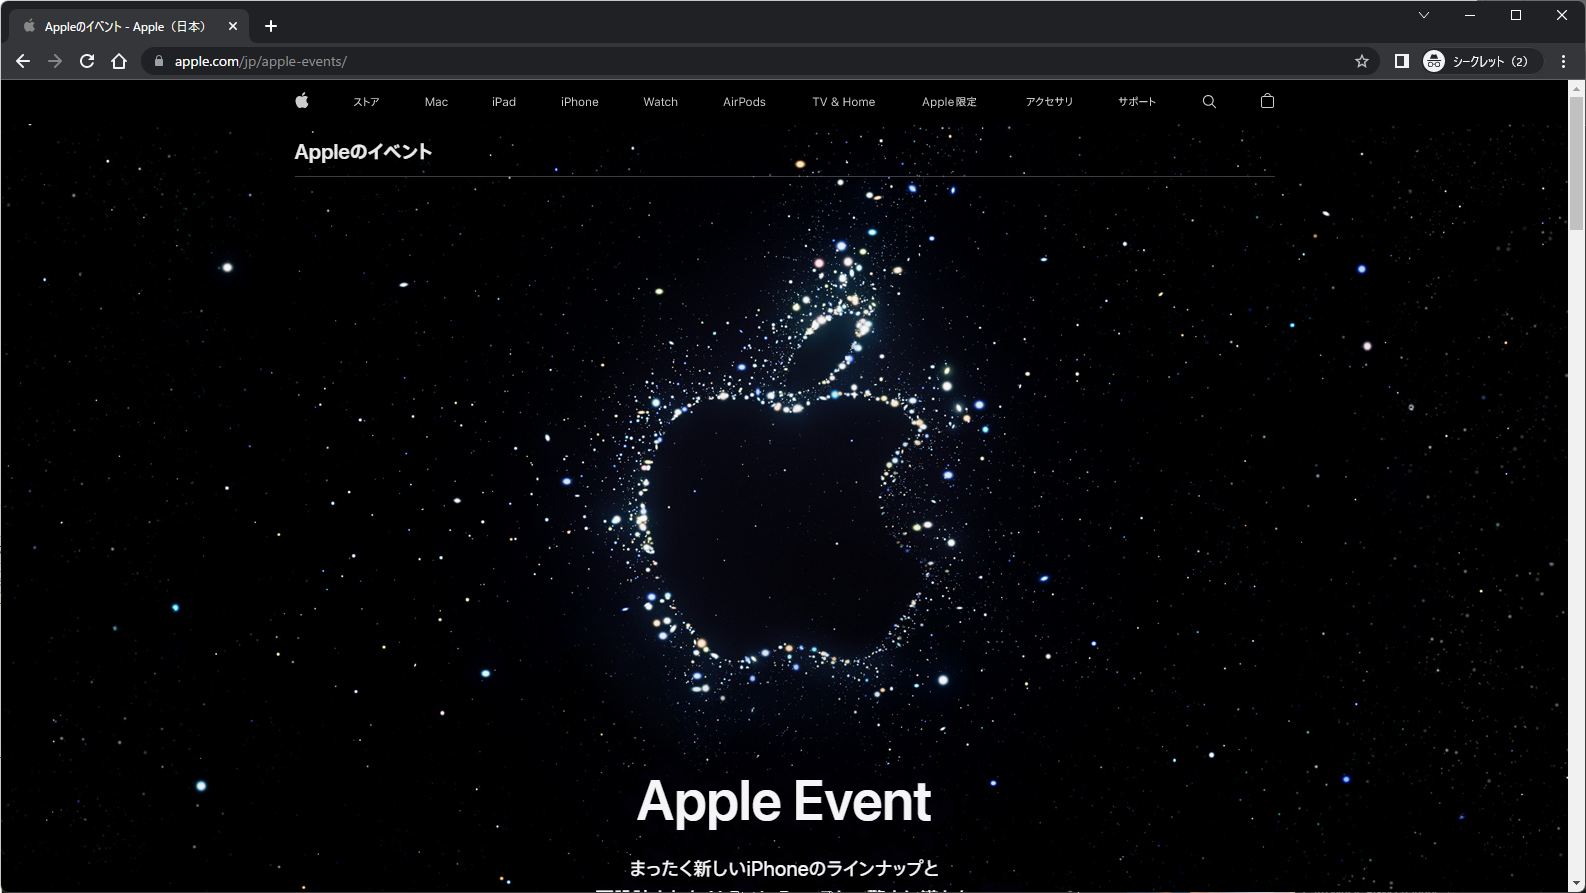 Apple Event 2022